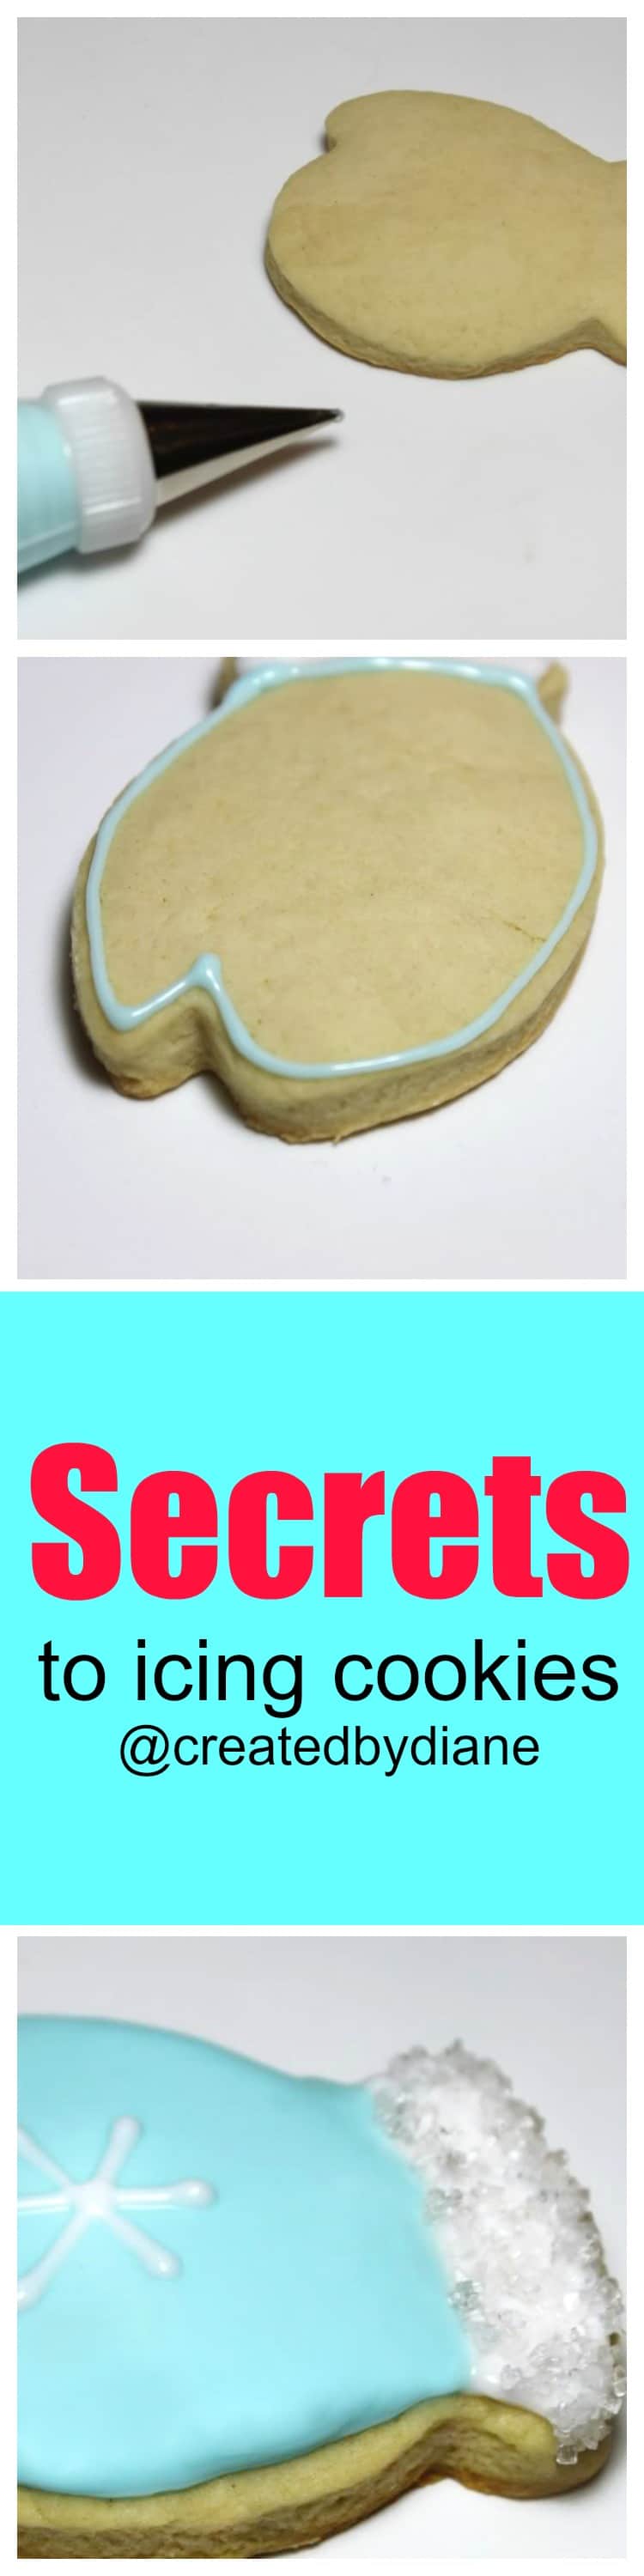 secrets to icing cookies @createdbydiane